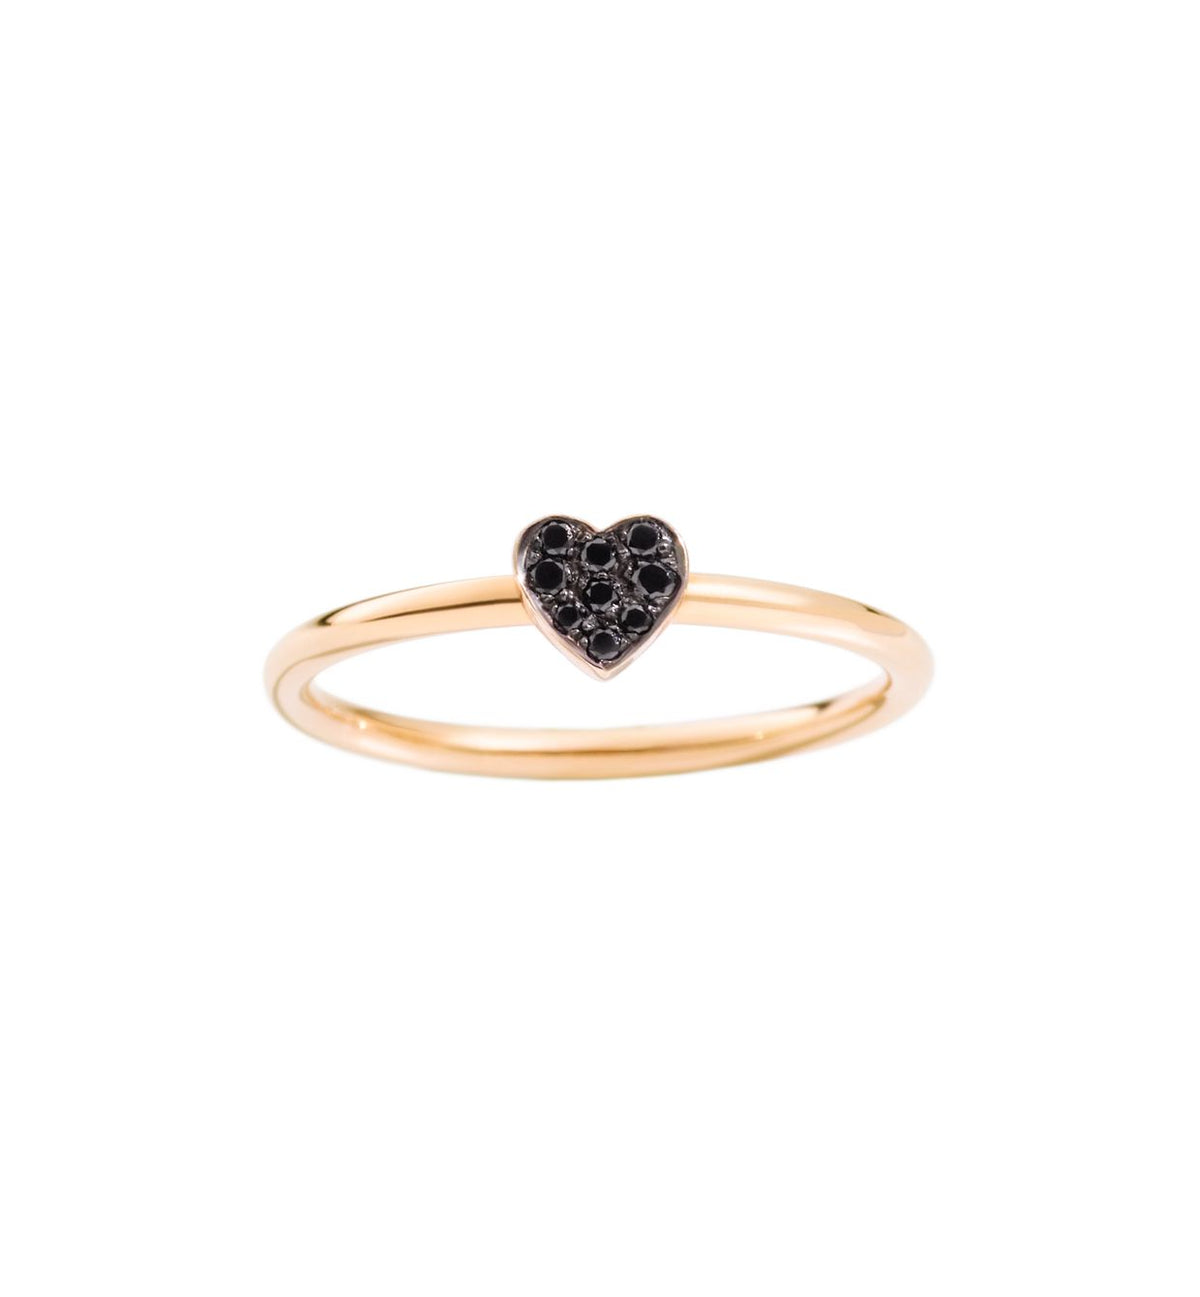 DoDo Heart Ring in 9k Rose Gold with Black Diamonds - Orsini Jewellers NZ